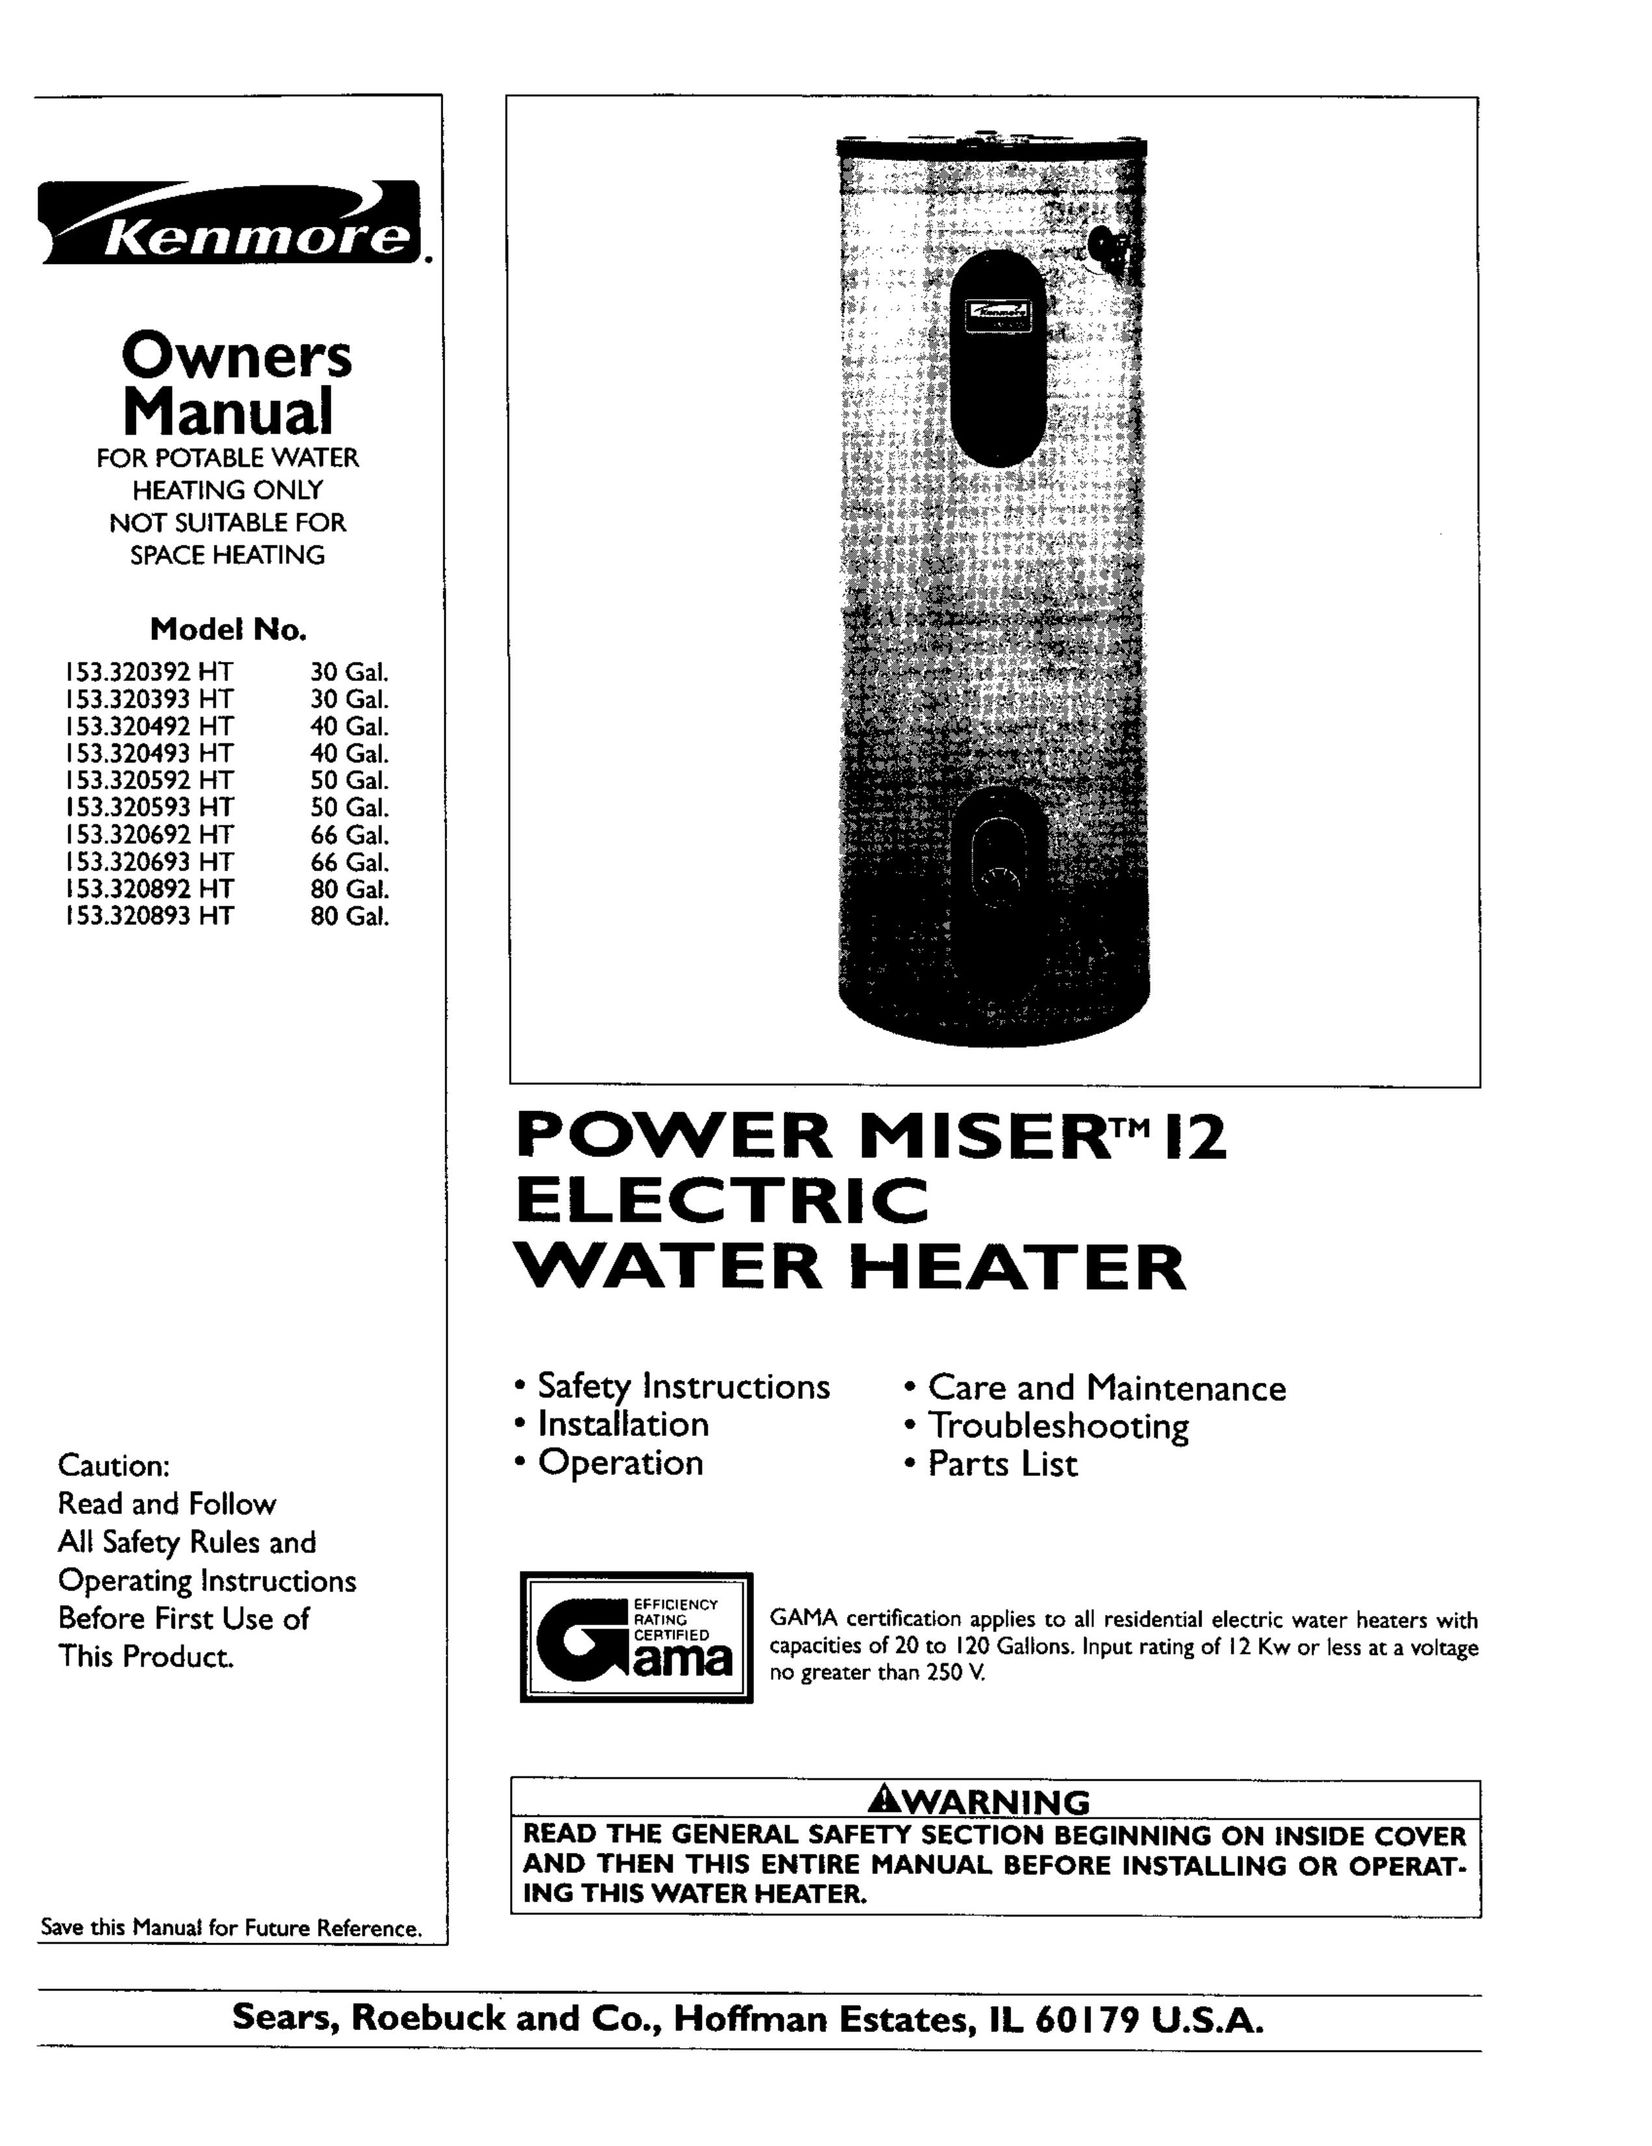 Kenmore 153.320893 HT Water Heater User Manual